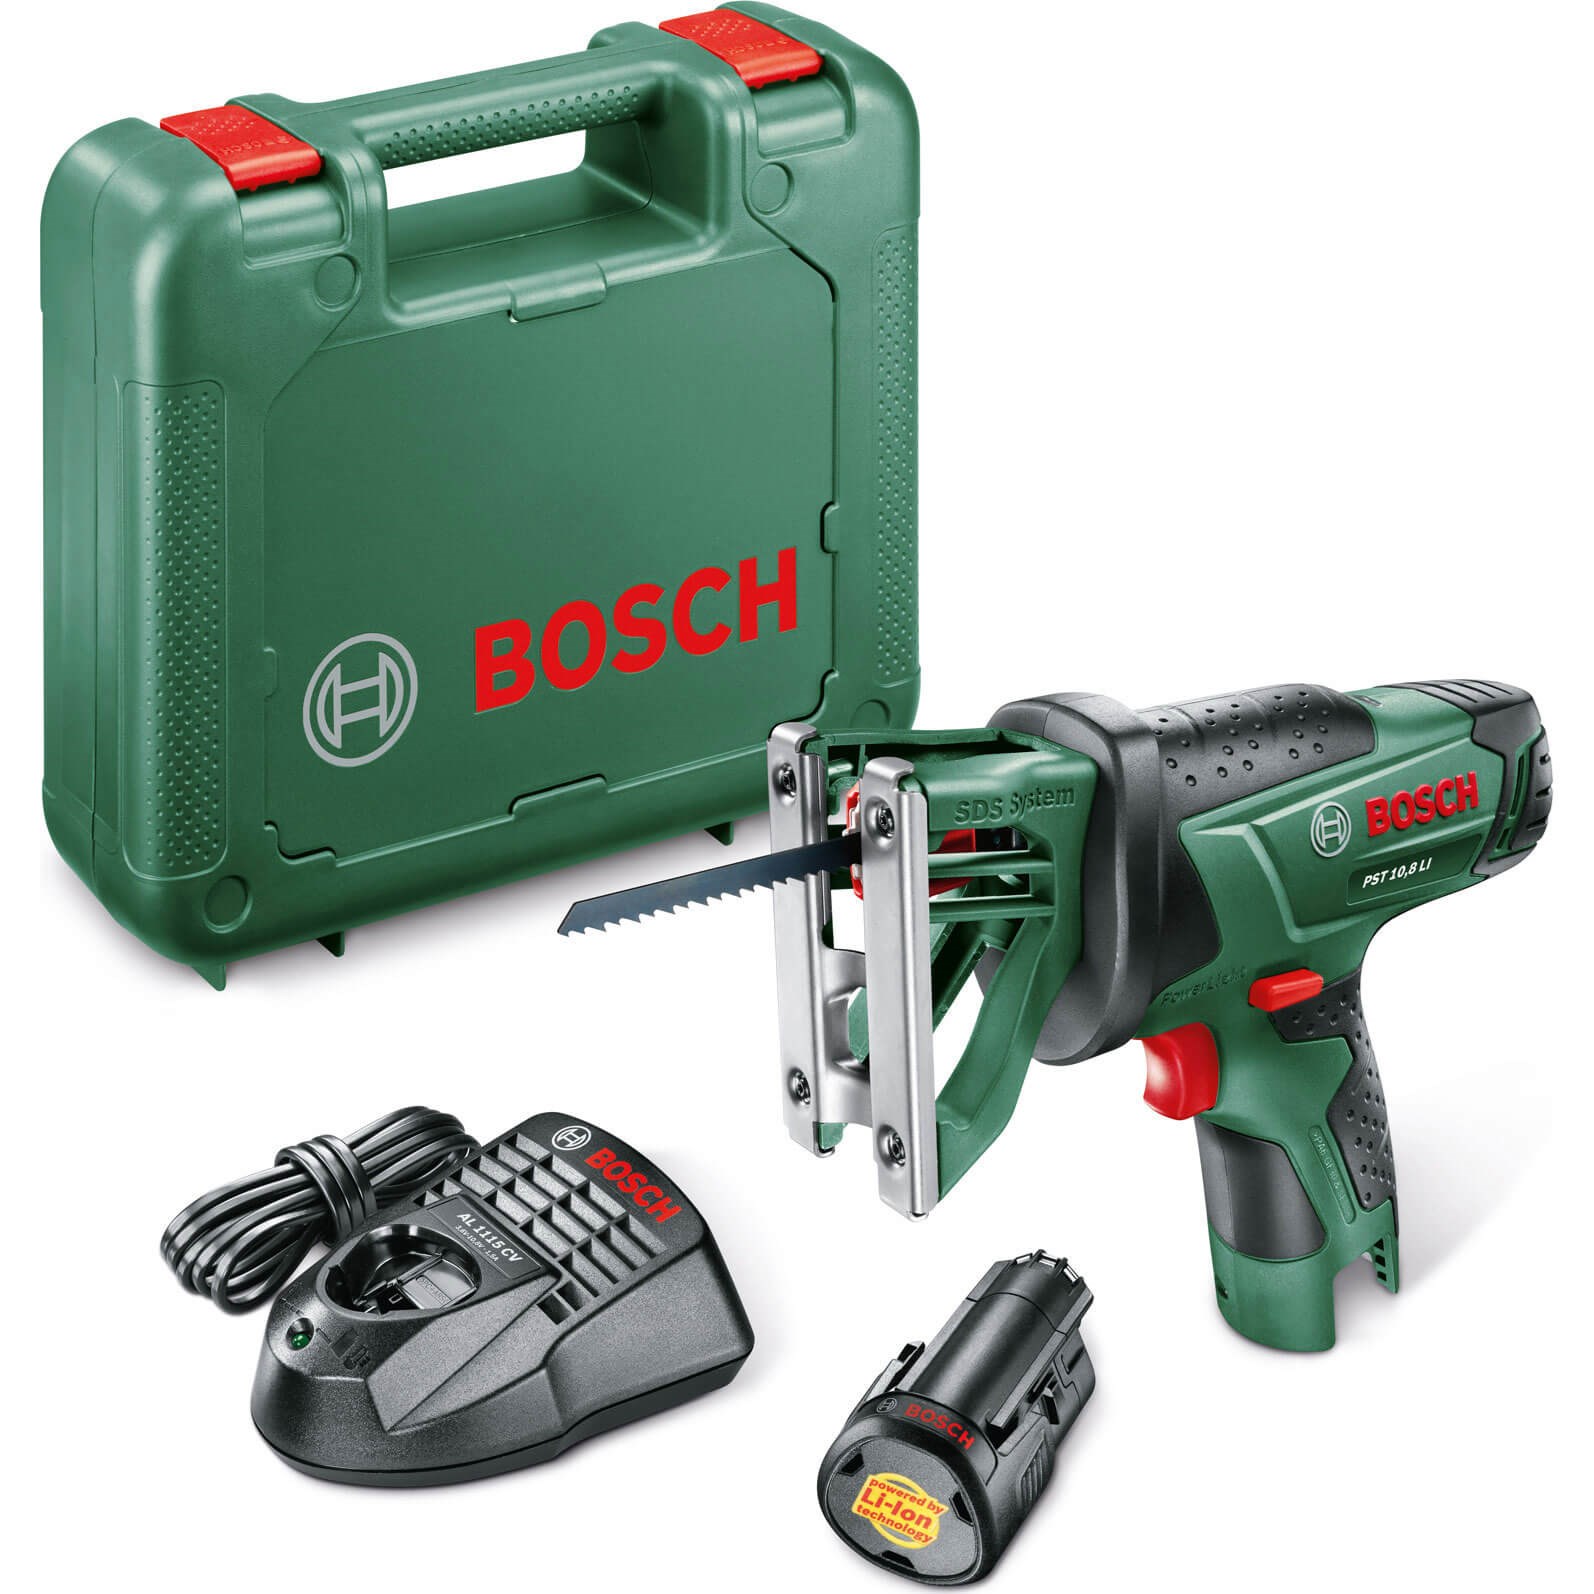 Bosch Power4all Pst 10 8 Li 10 8v Cordless Jigsaw Reciprocating